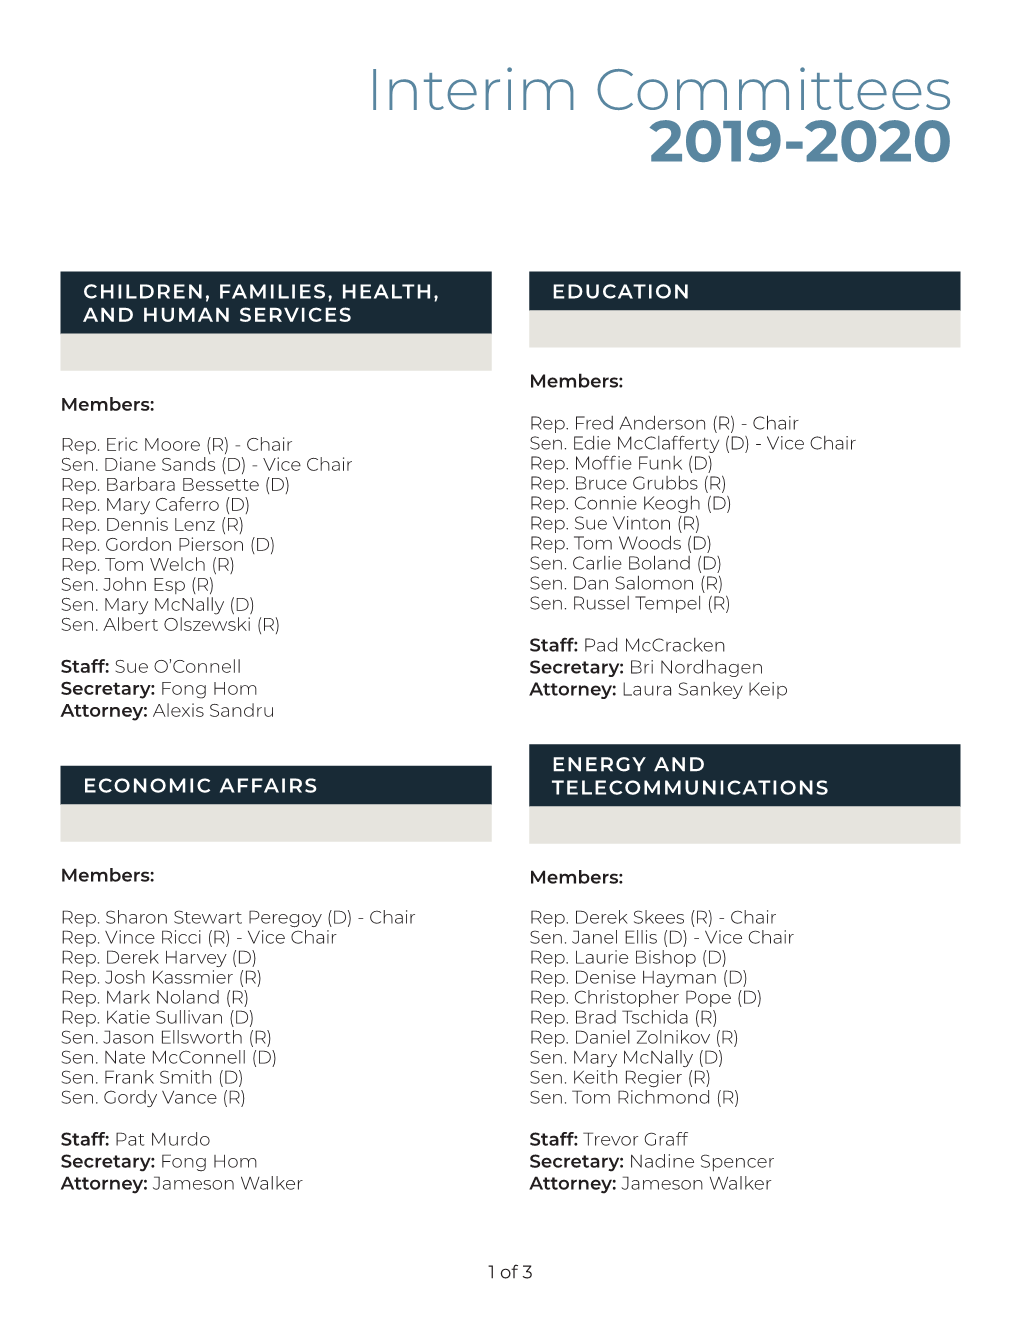 Interim Committees 2019-2020